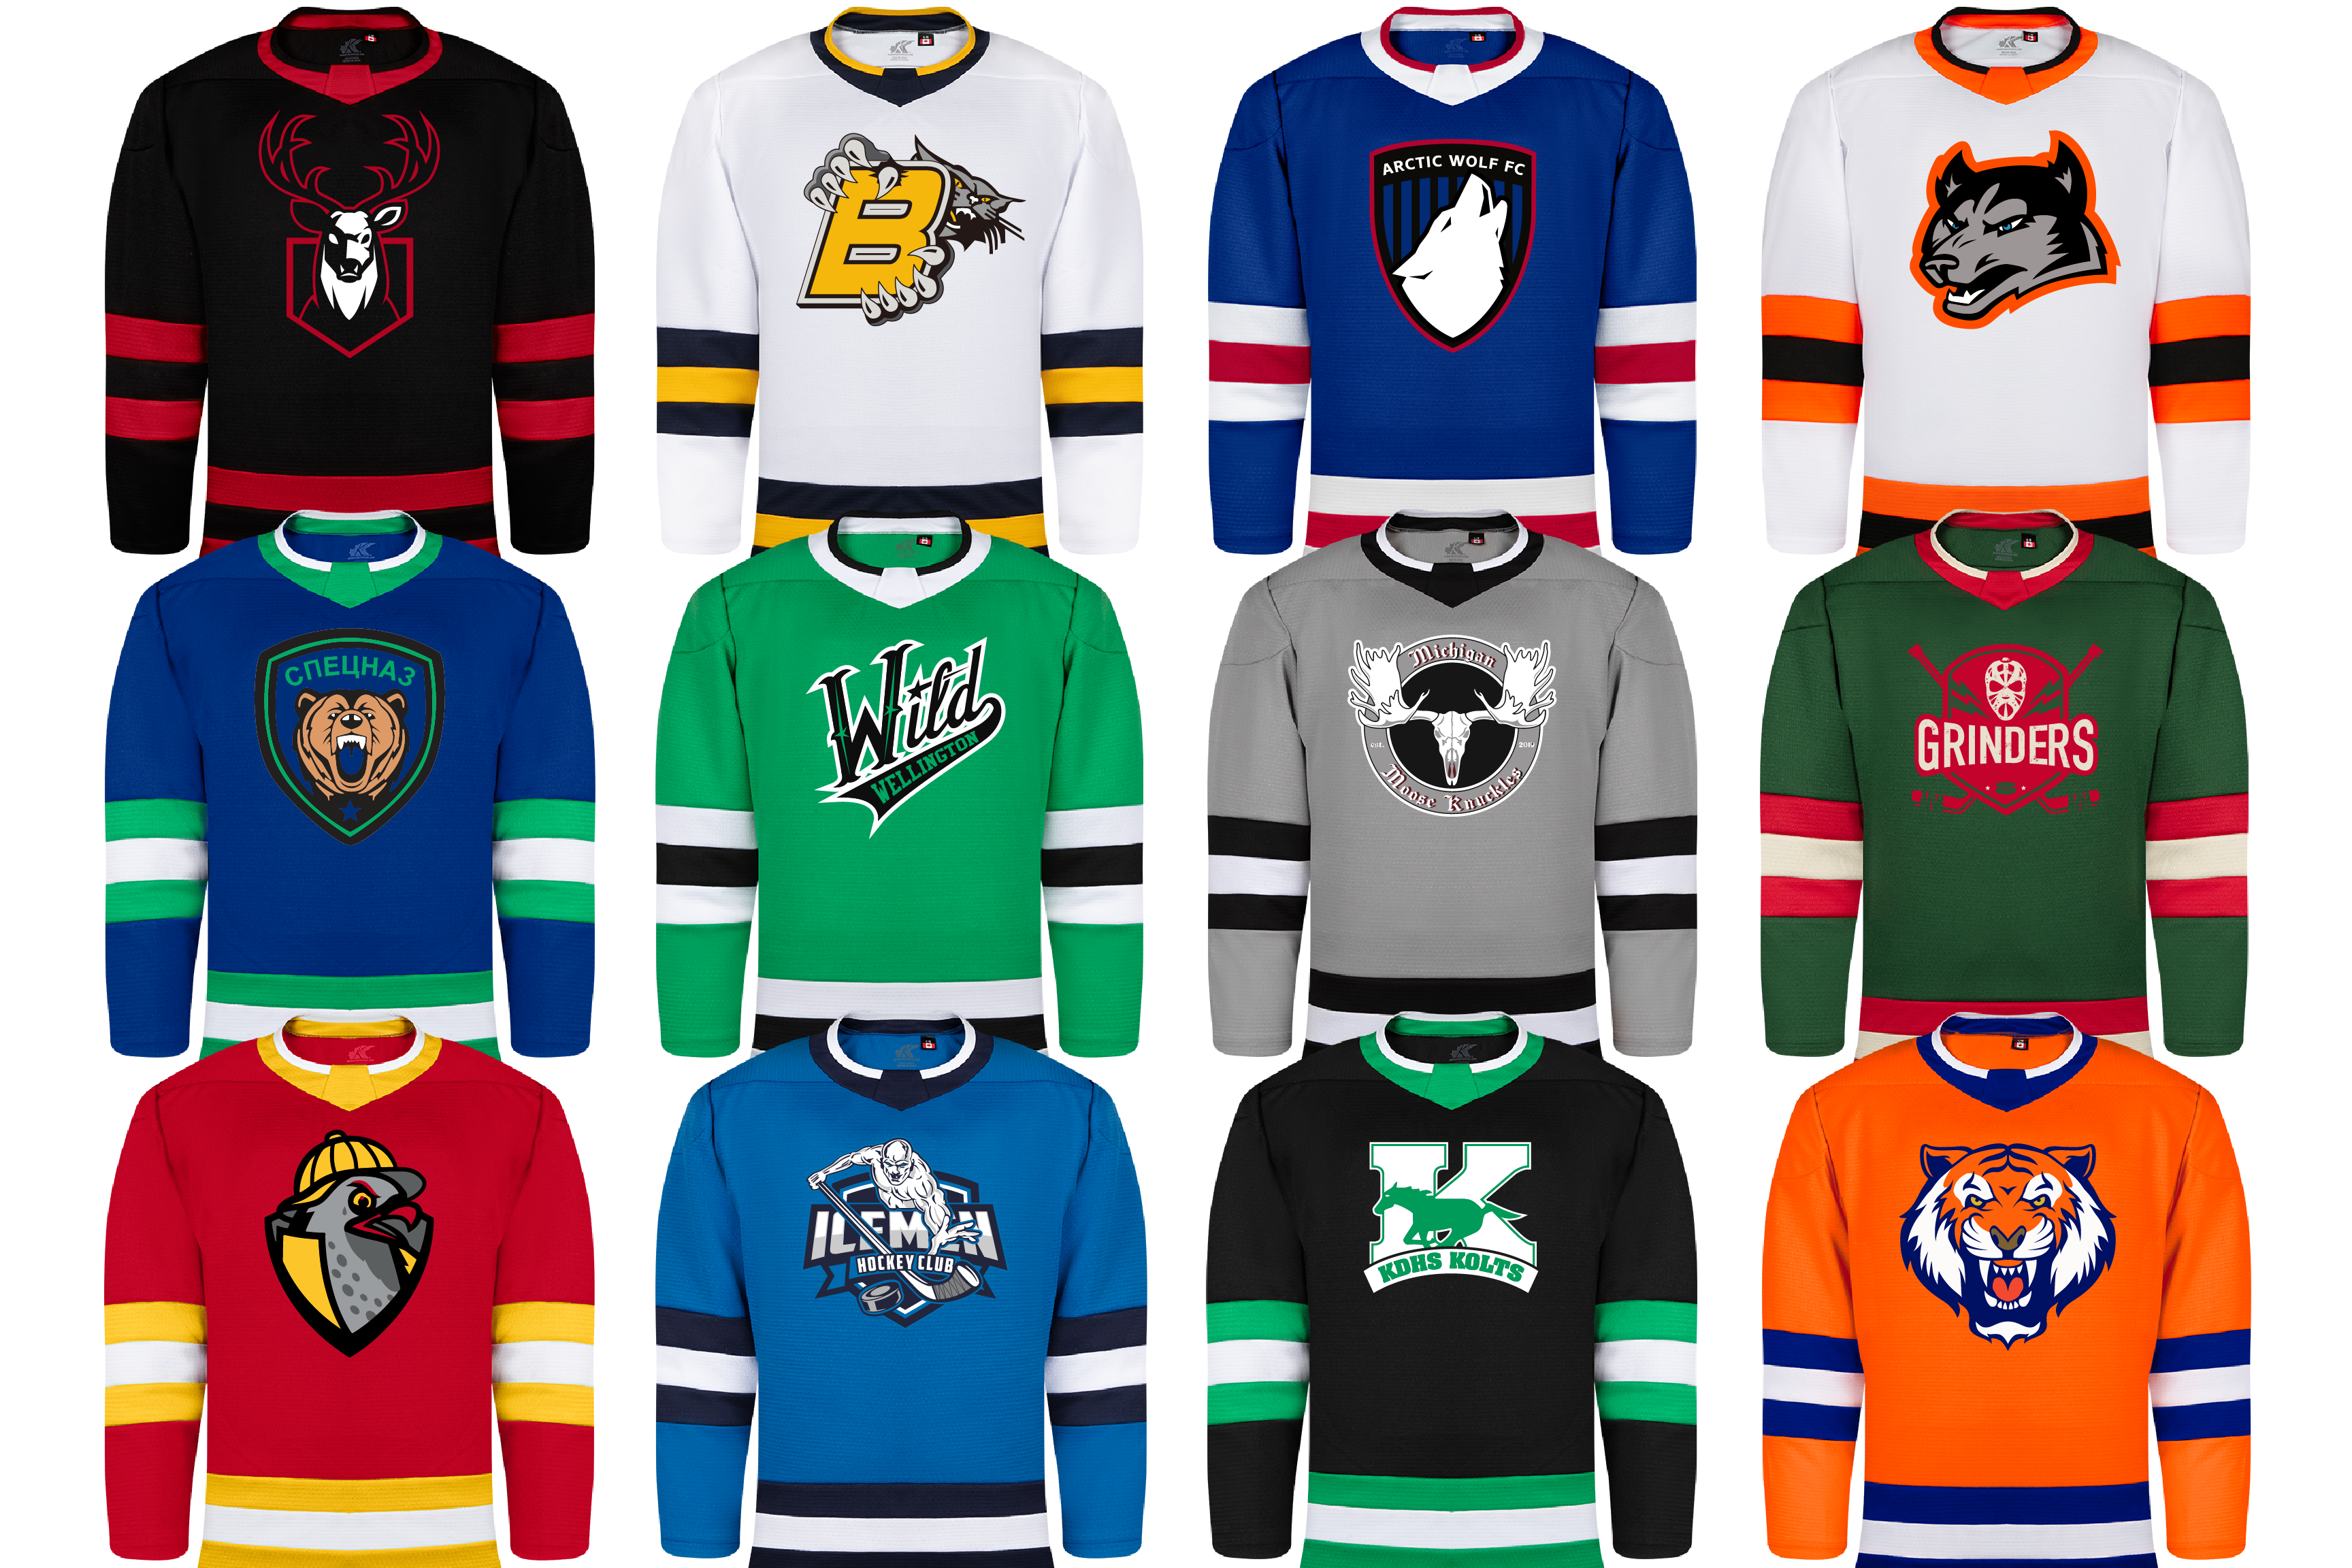 Sample K3GL Hockey Jerseys with Custom Logos